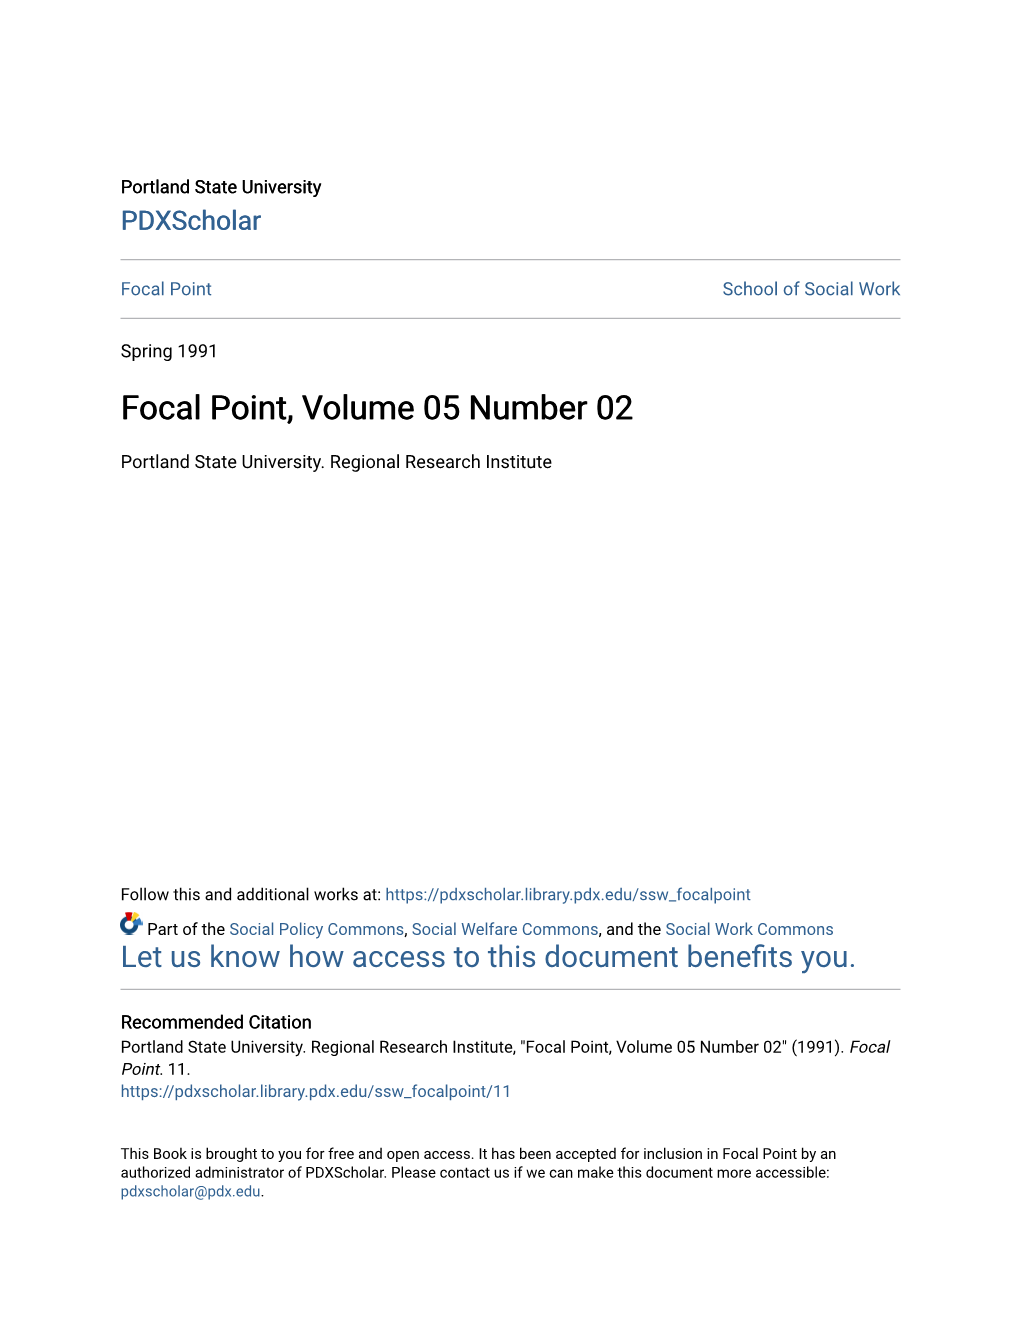 Focal Point, Volume 05 Number 02